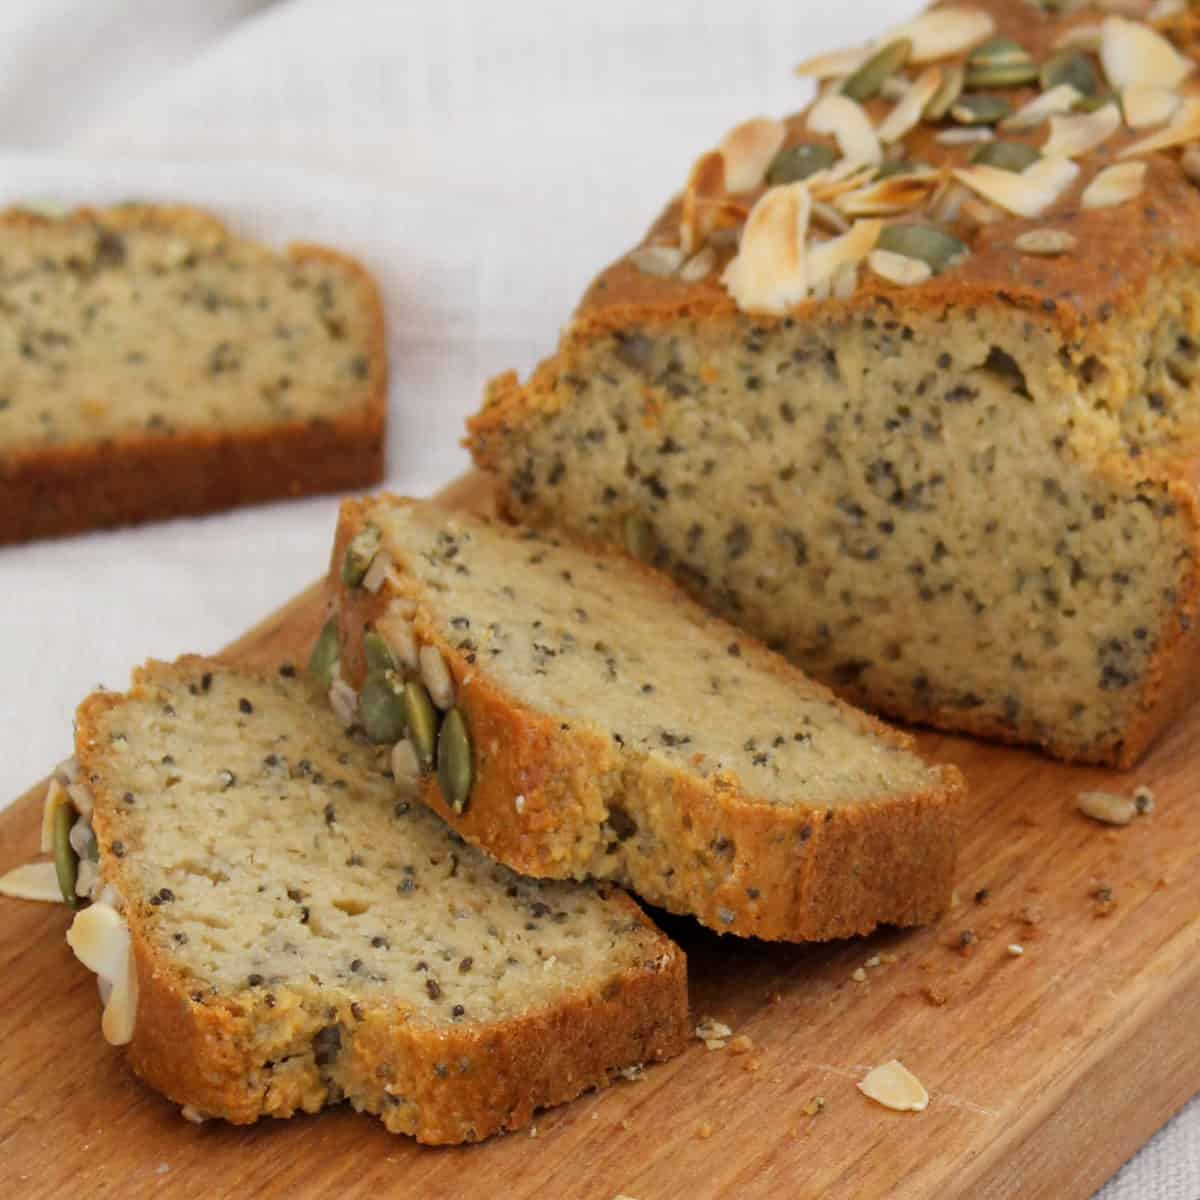 slices of gluten-free yeast-free bread